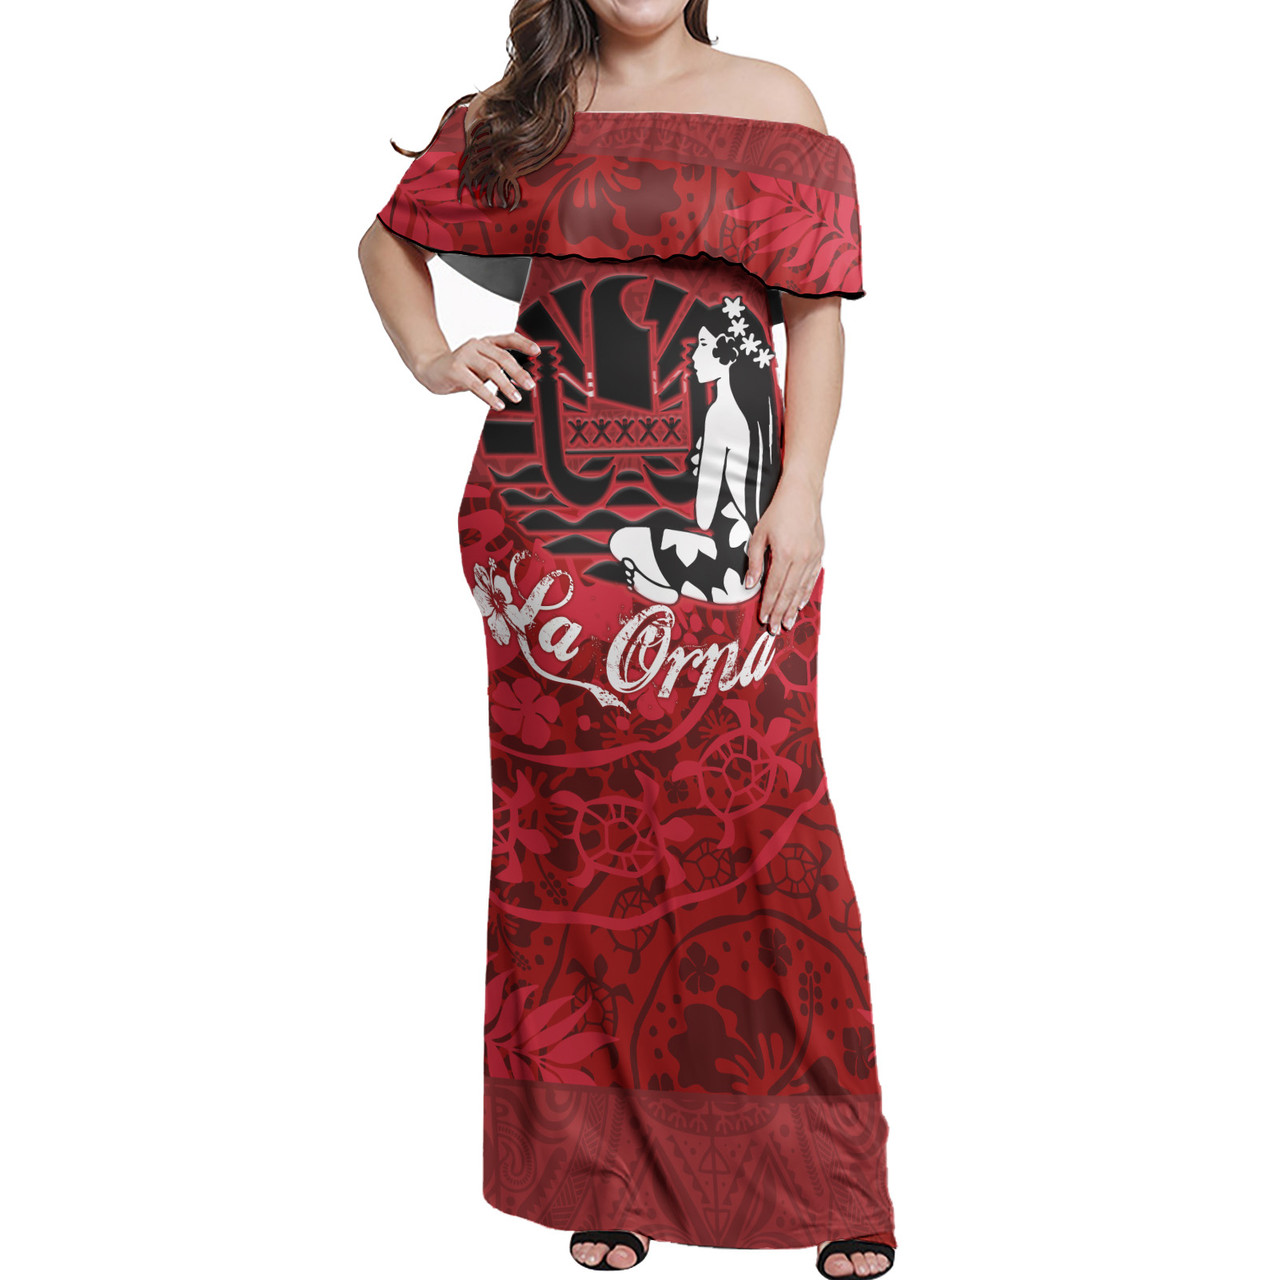 Tahiti Combo Off Shoulder Long Dress And Shirt - Tahitian Girl La Orna Style